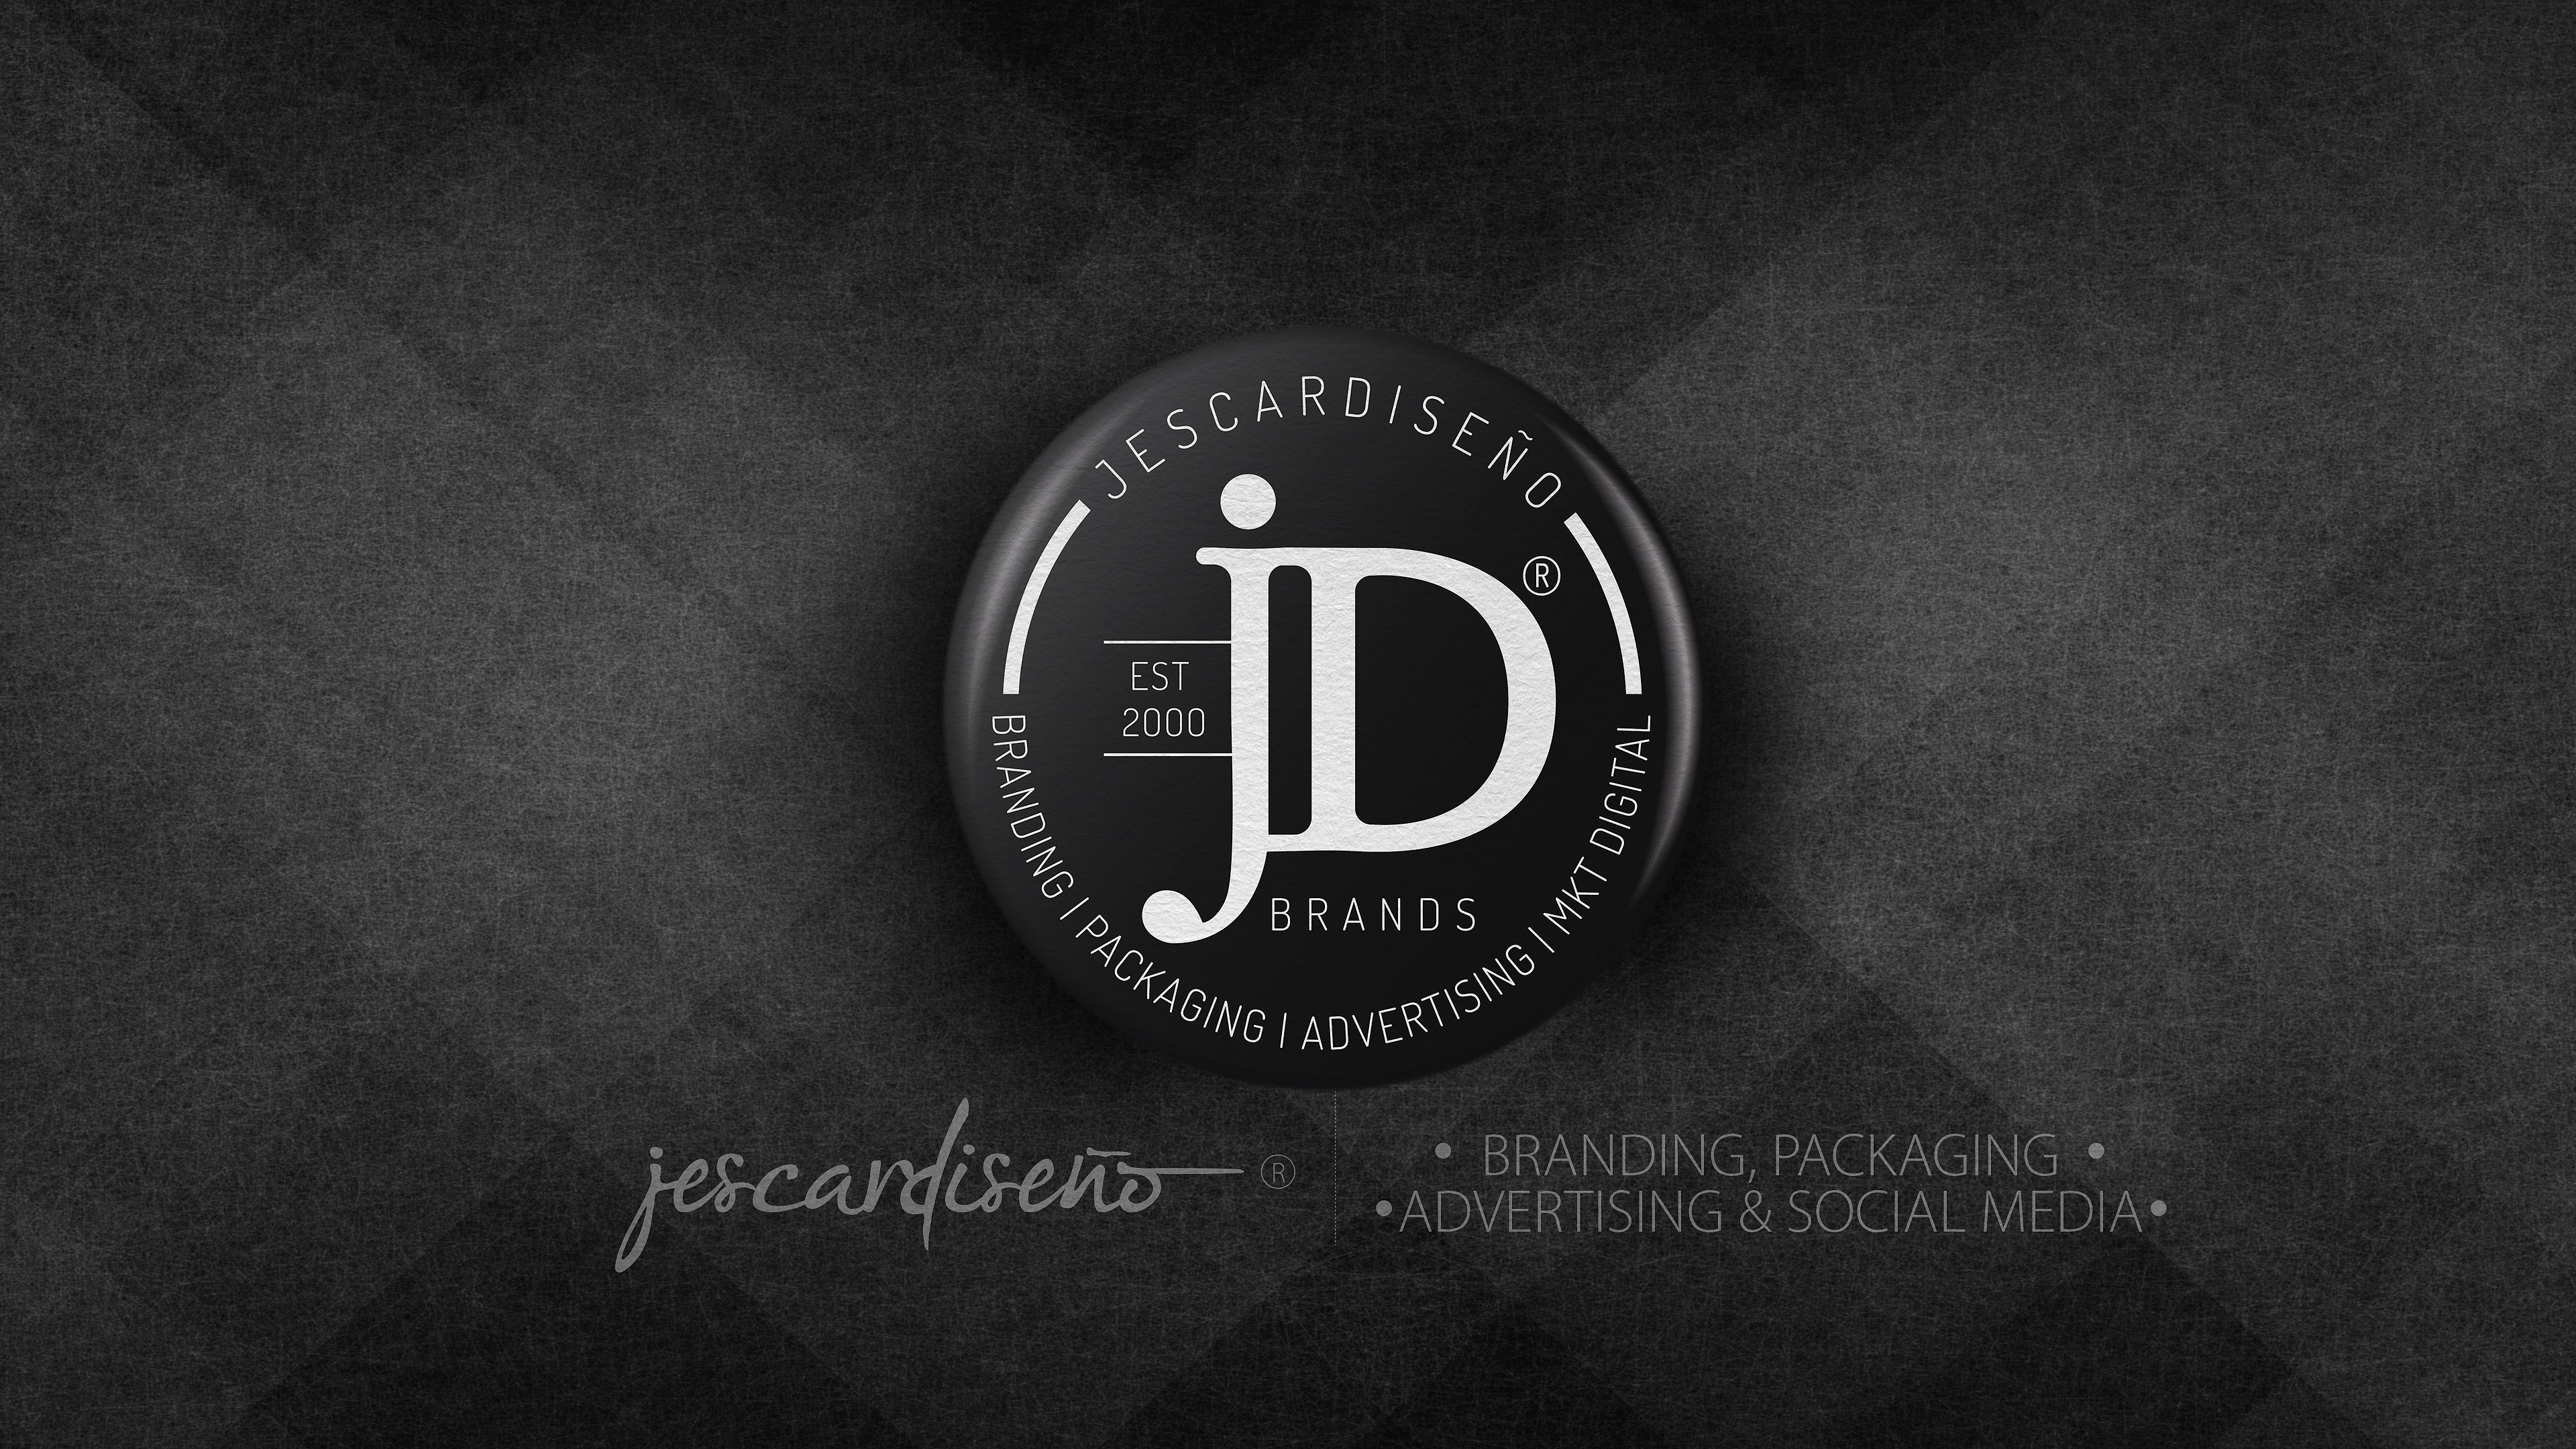 aaajdbrands packaging branding jescardiseno portafolio c v2